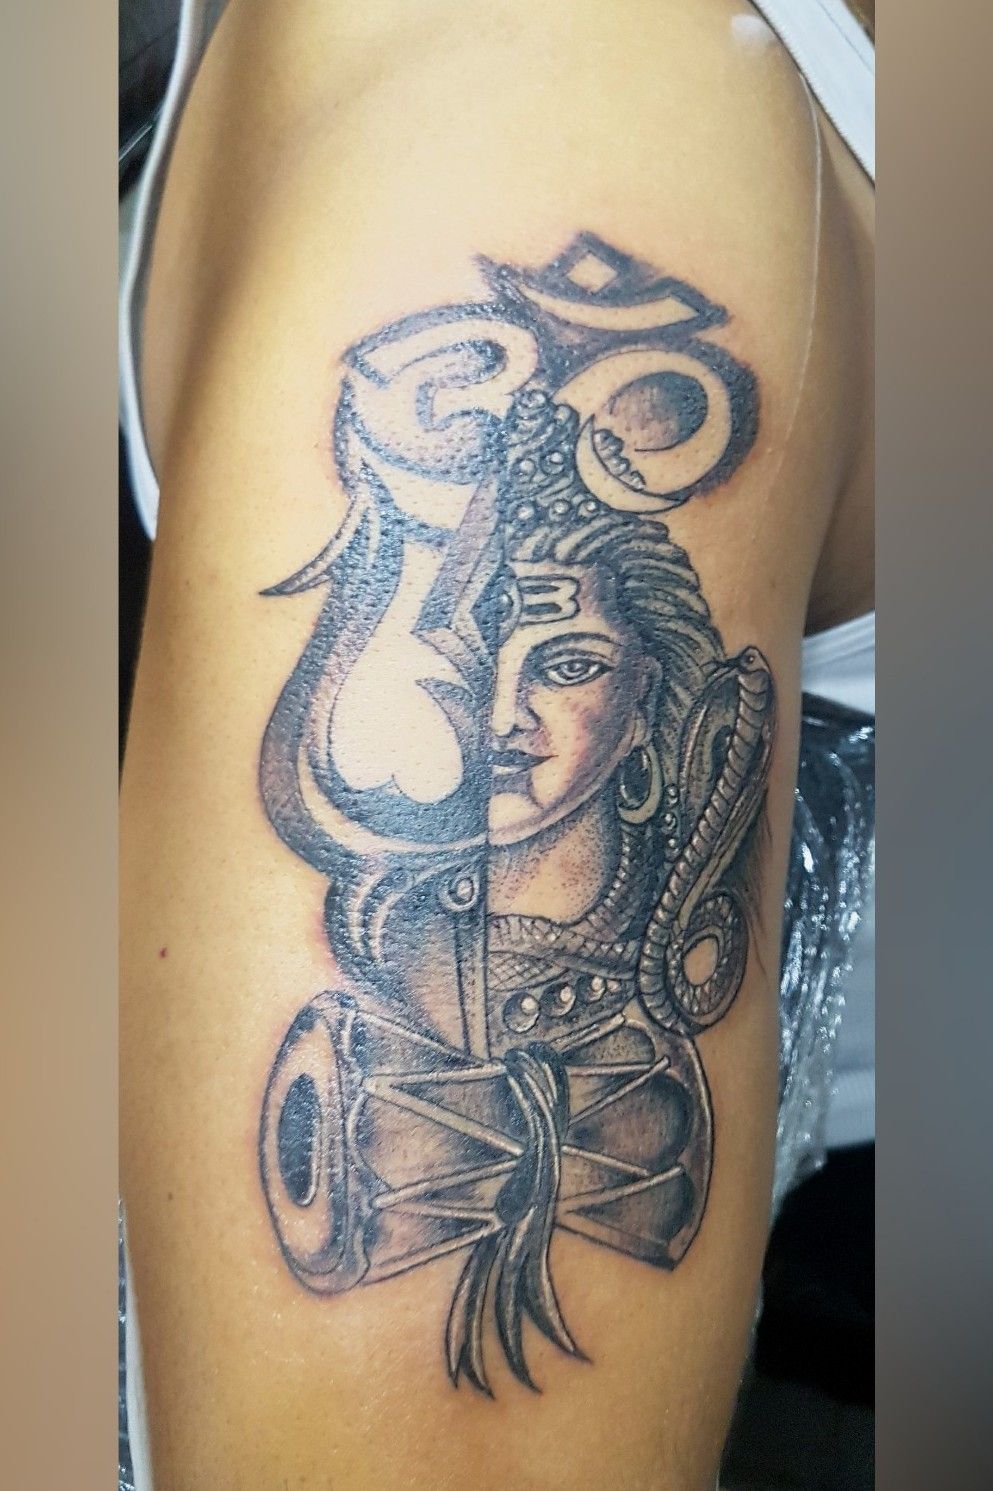 Shankar ji tattoo done by devilbrothersinkzone Book your appointment  no9876810576  Instagram